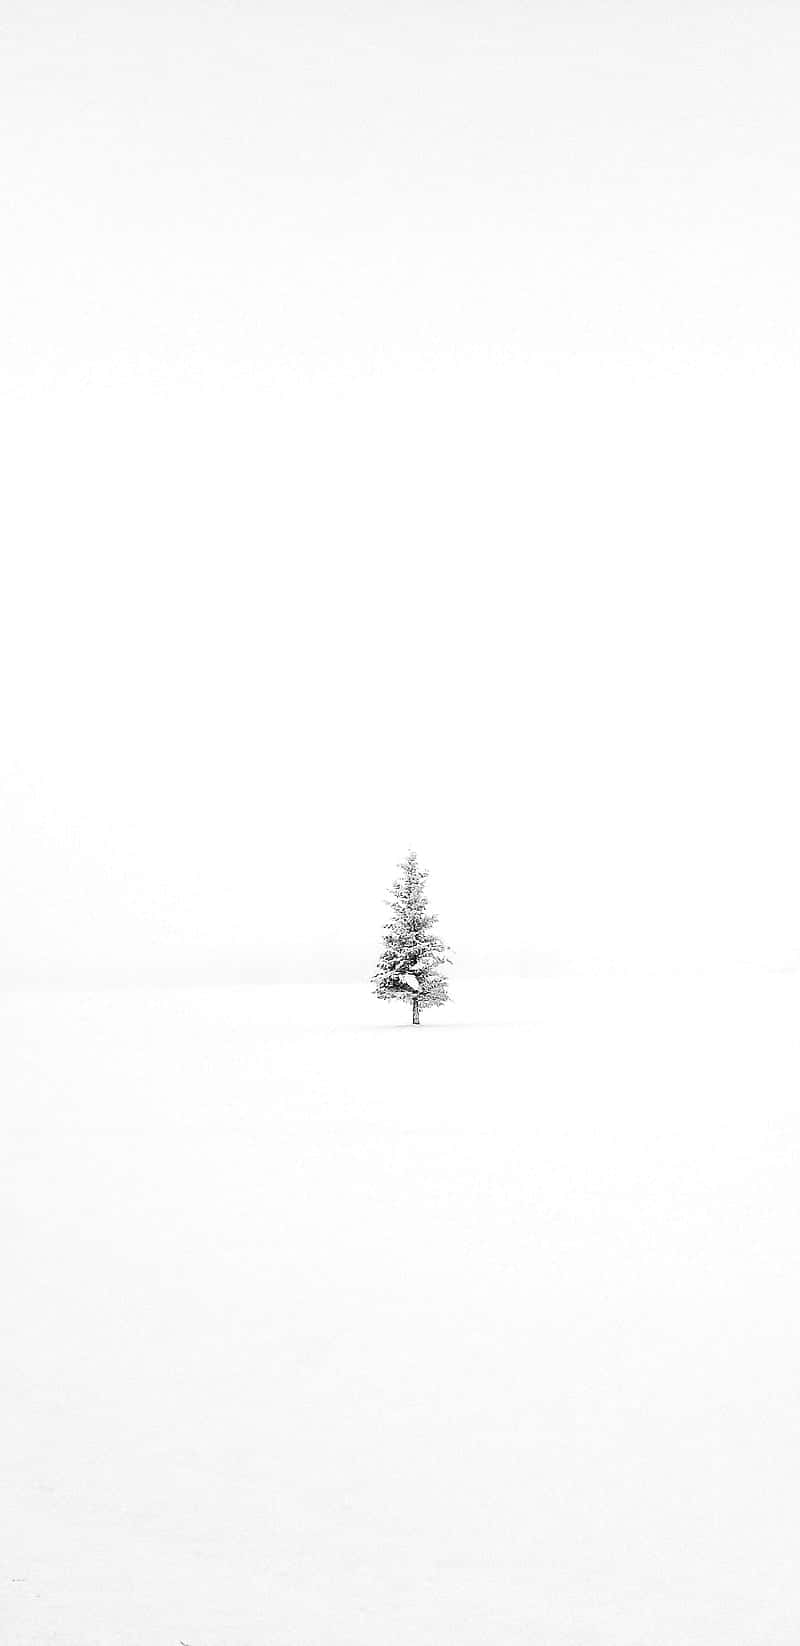 Solitary Winter Tree Minimalism.jpg Wallpaper